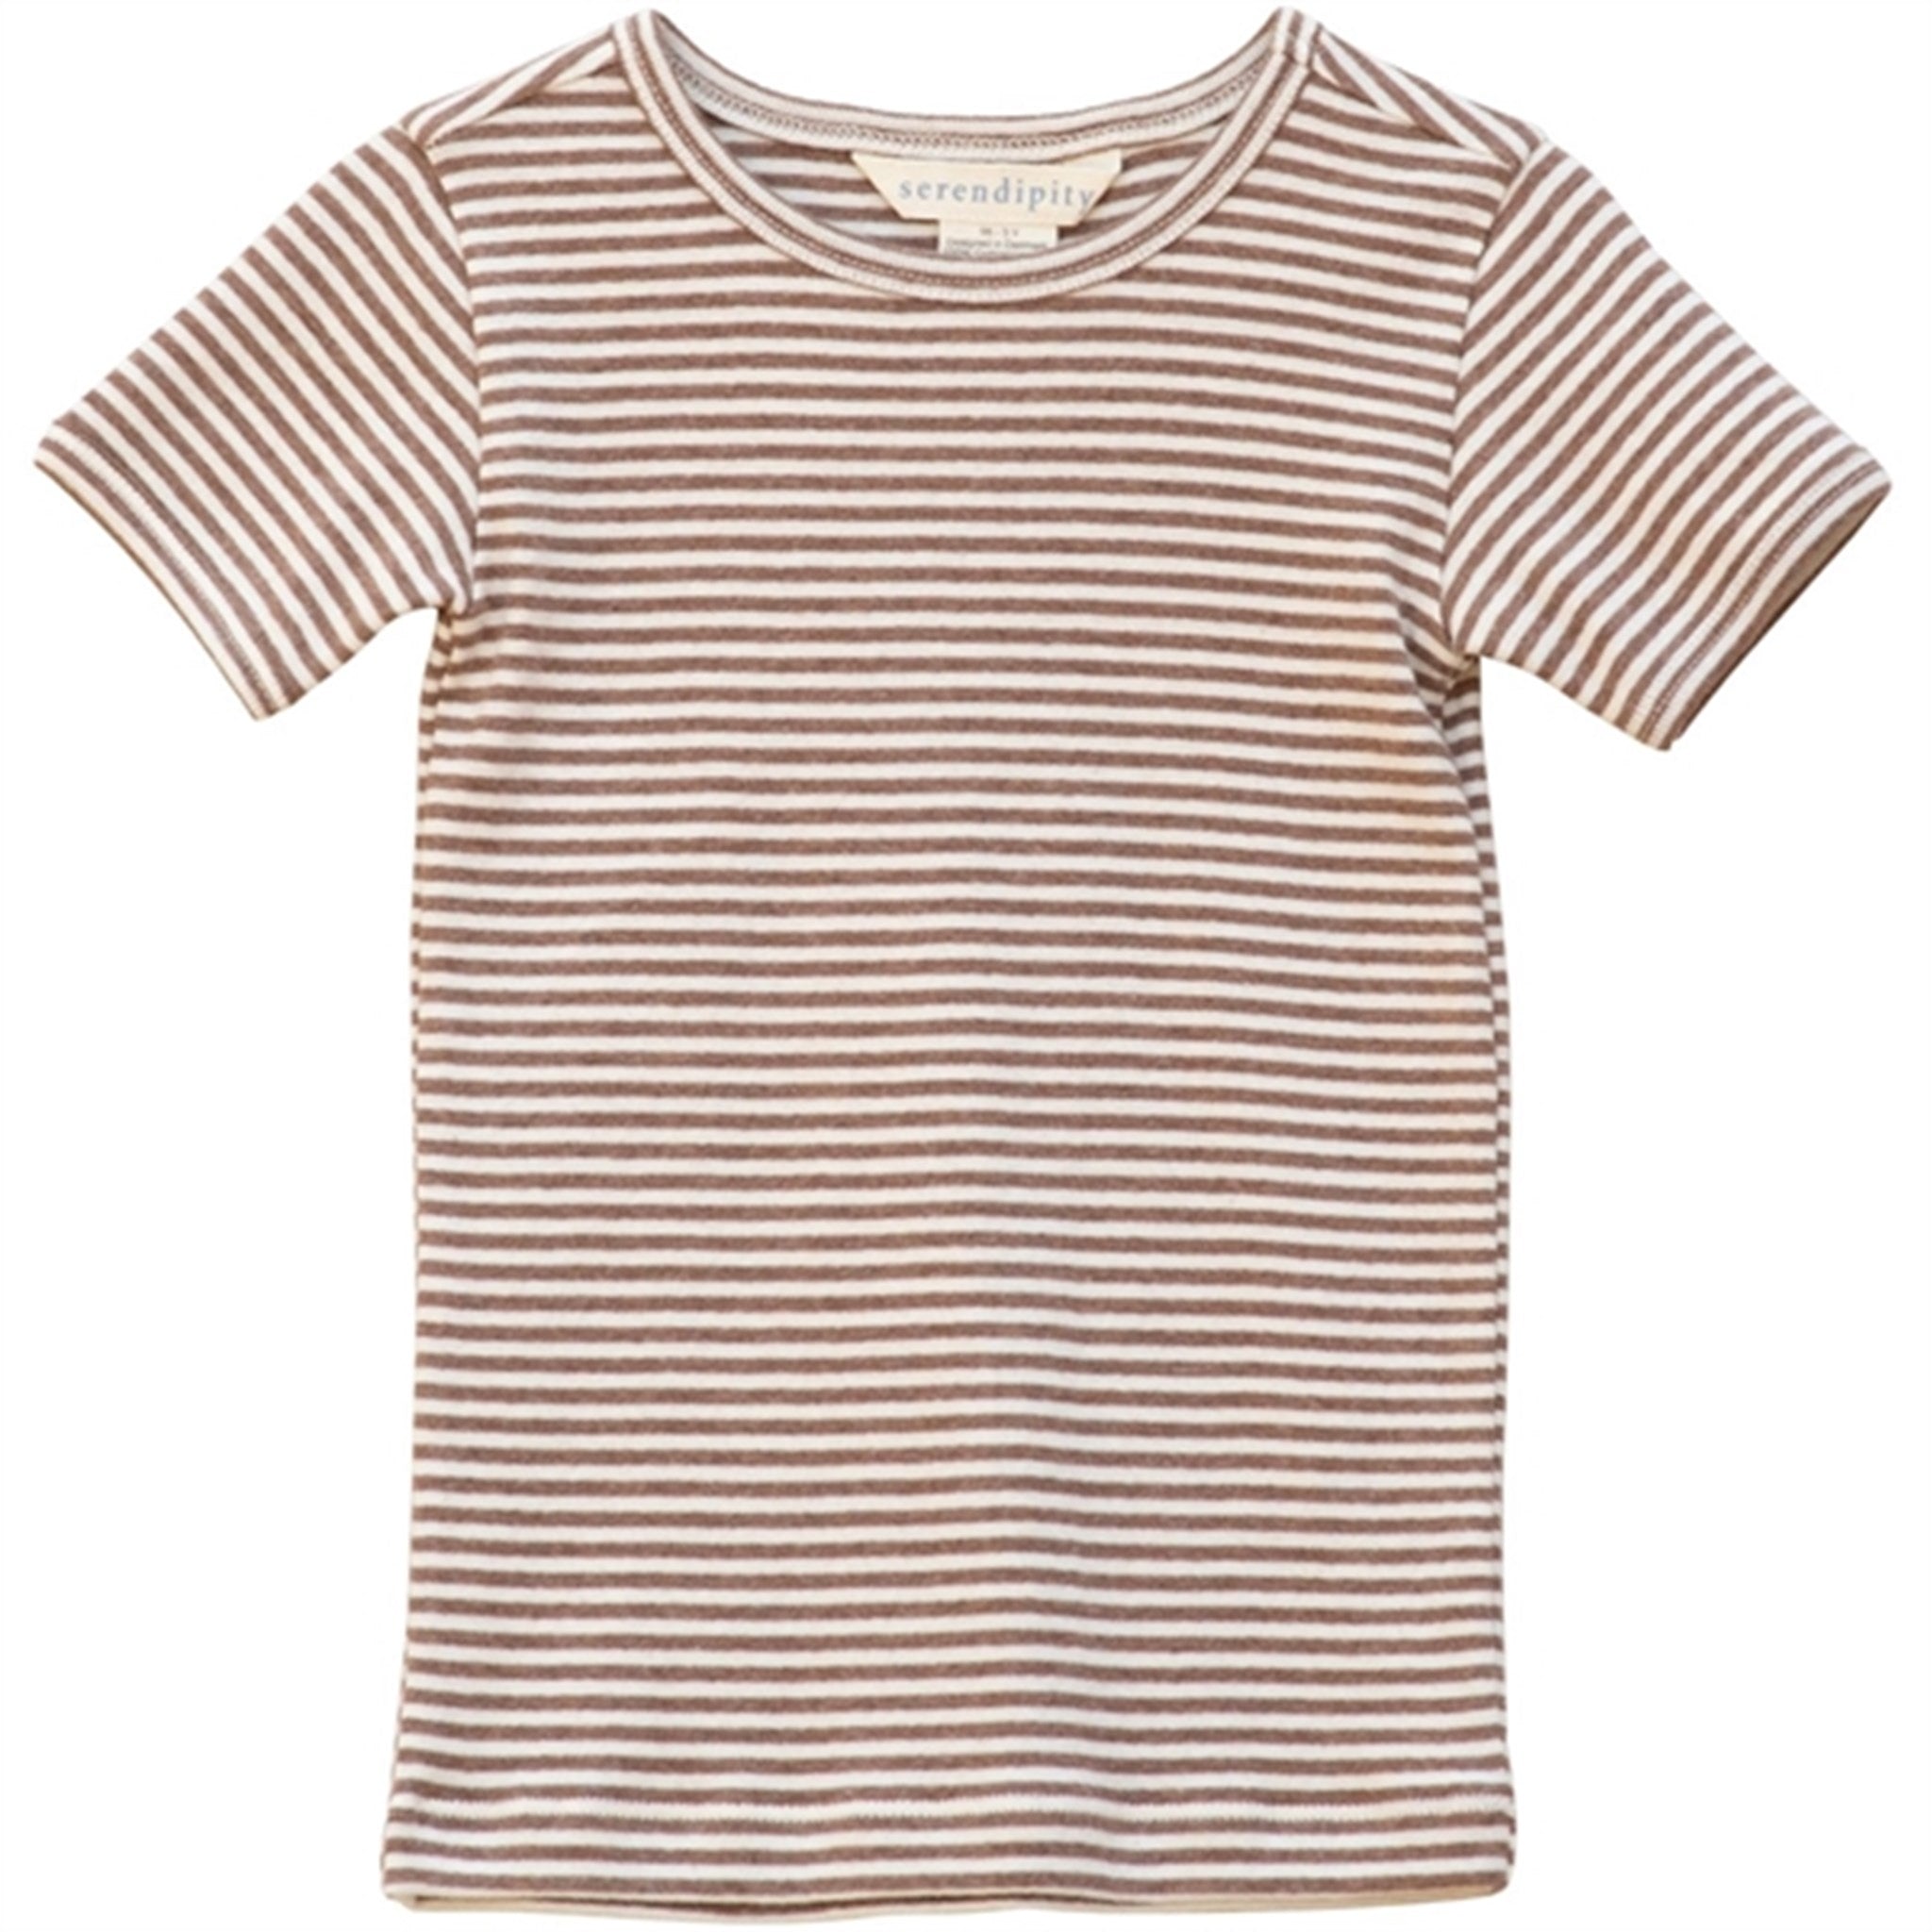 Serendipity Acorn/Offwhite Stripe T-shirt Short